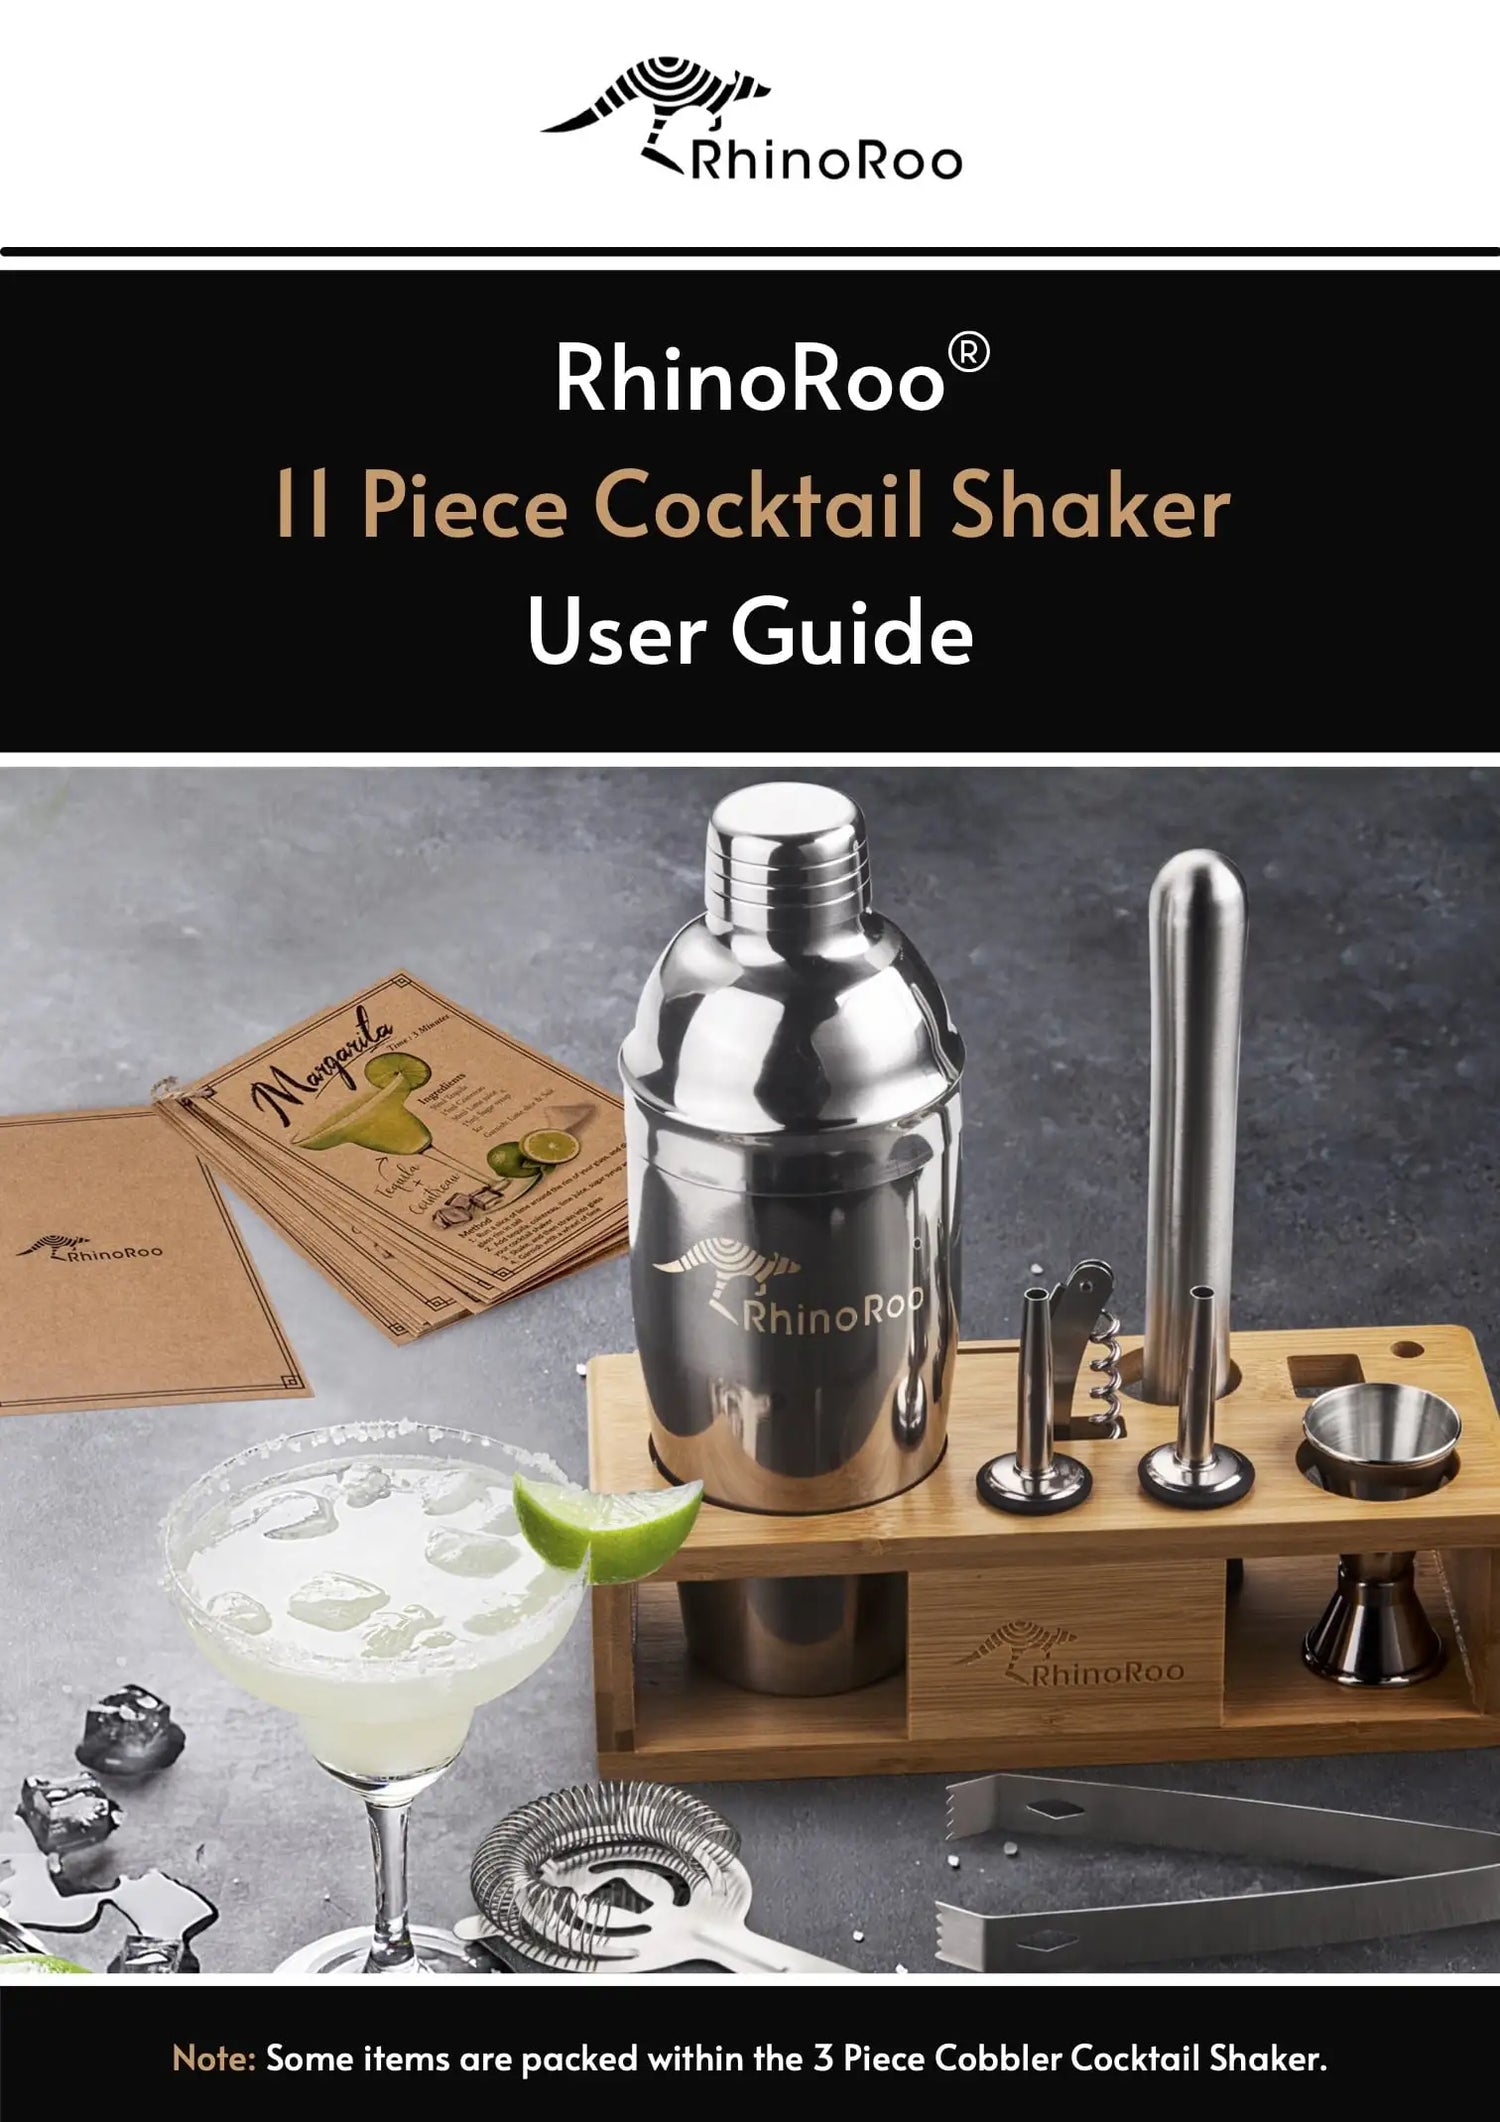 RhinoRoo Cobbler Cocktail Shaker Set Ebook User Guide